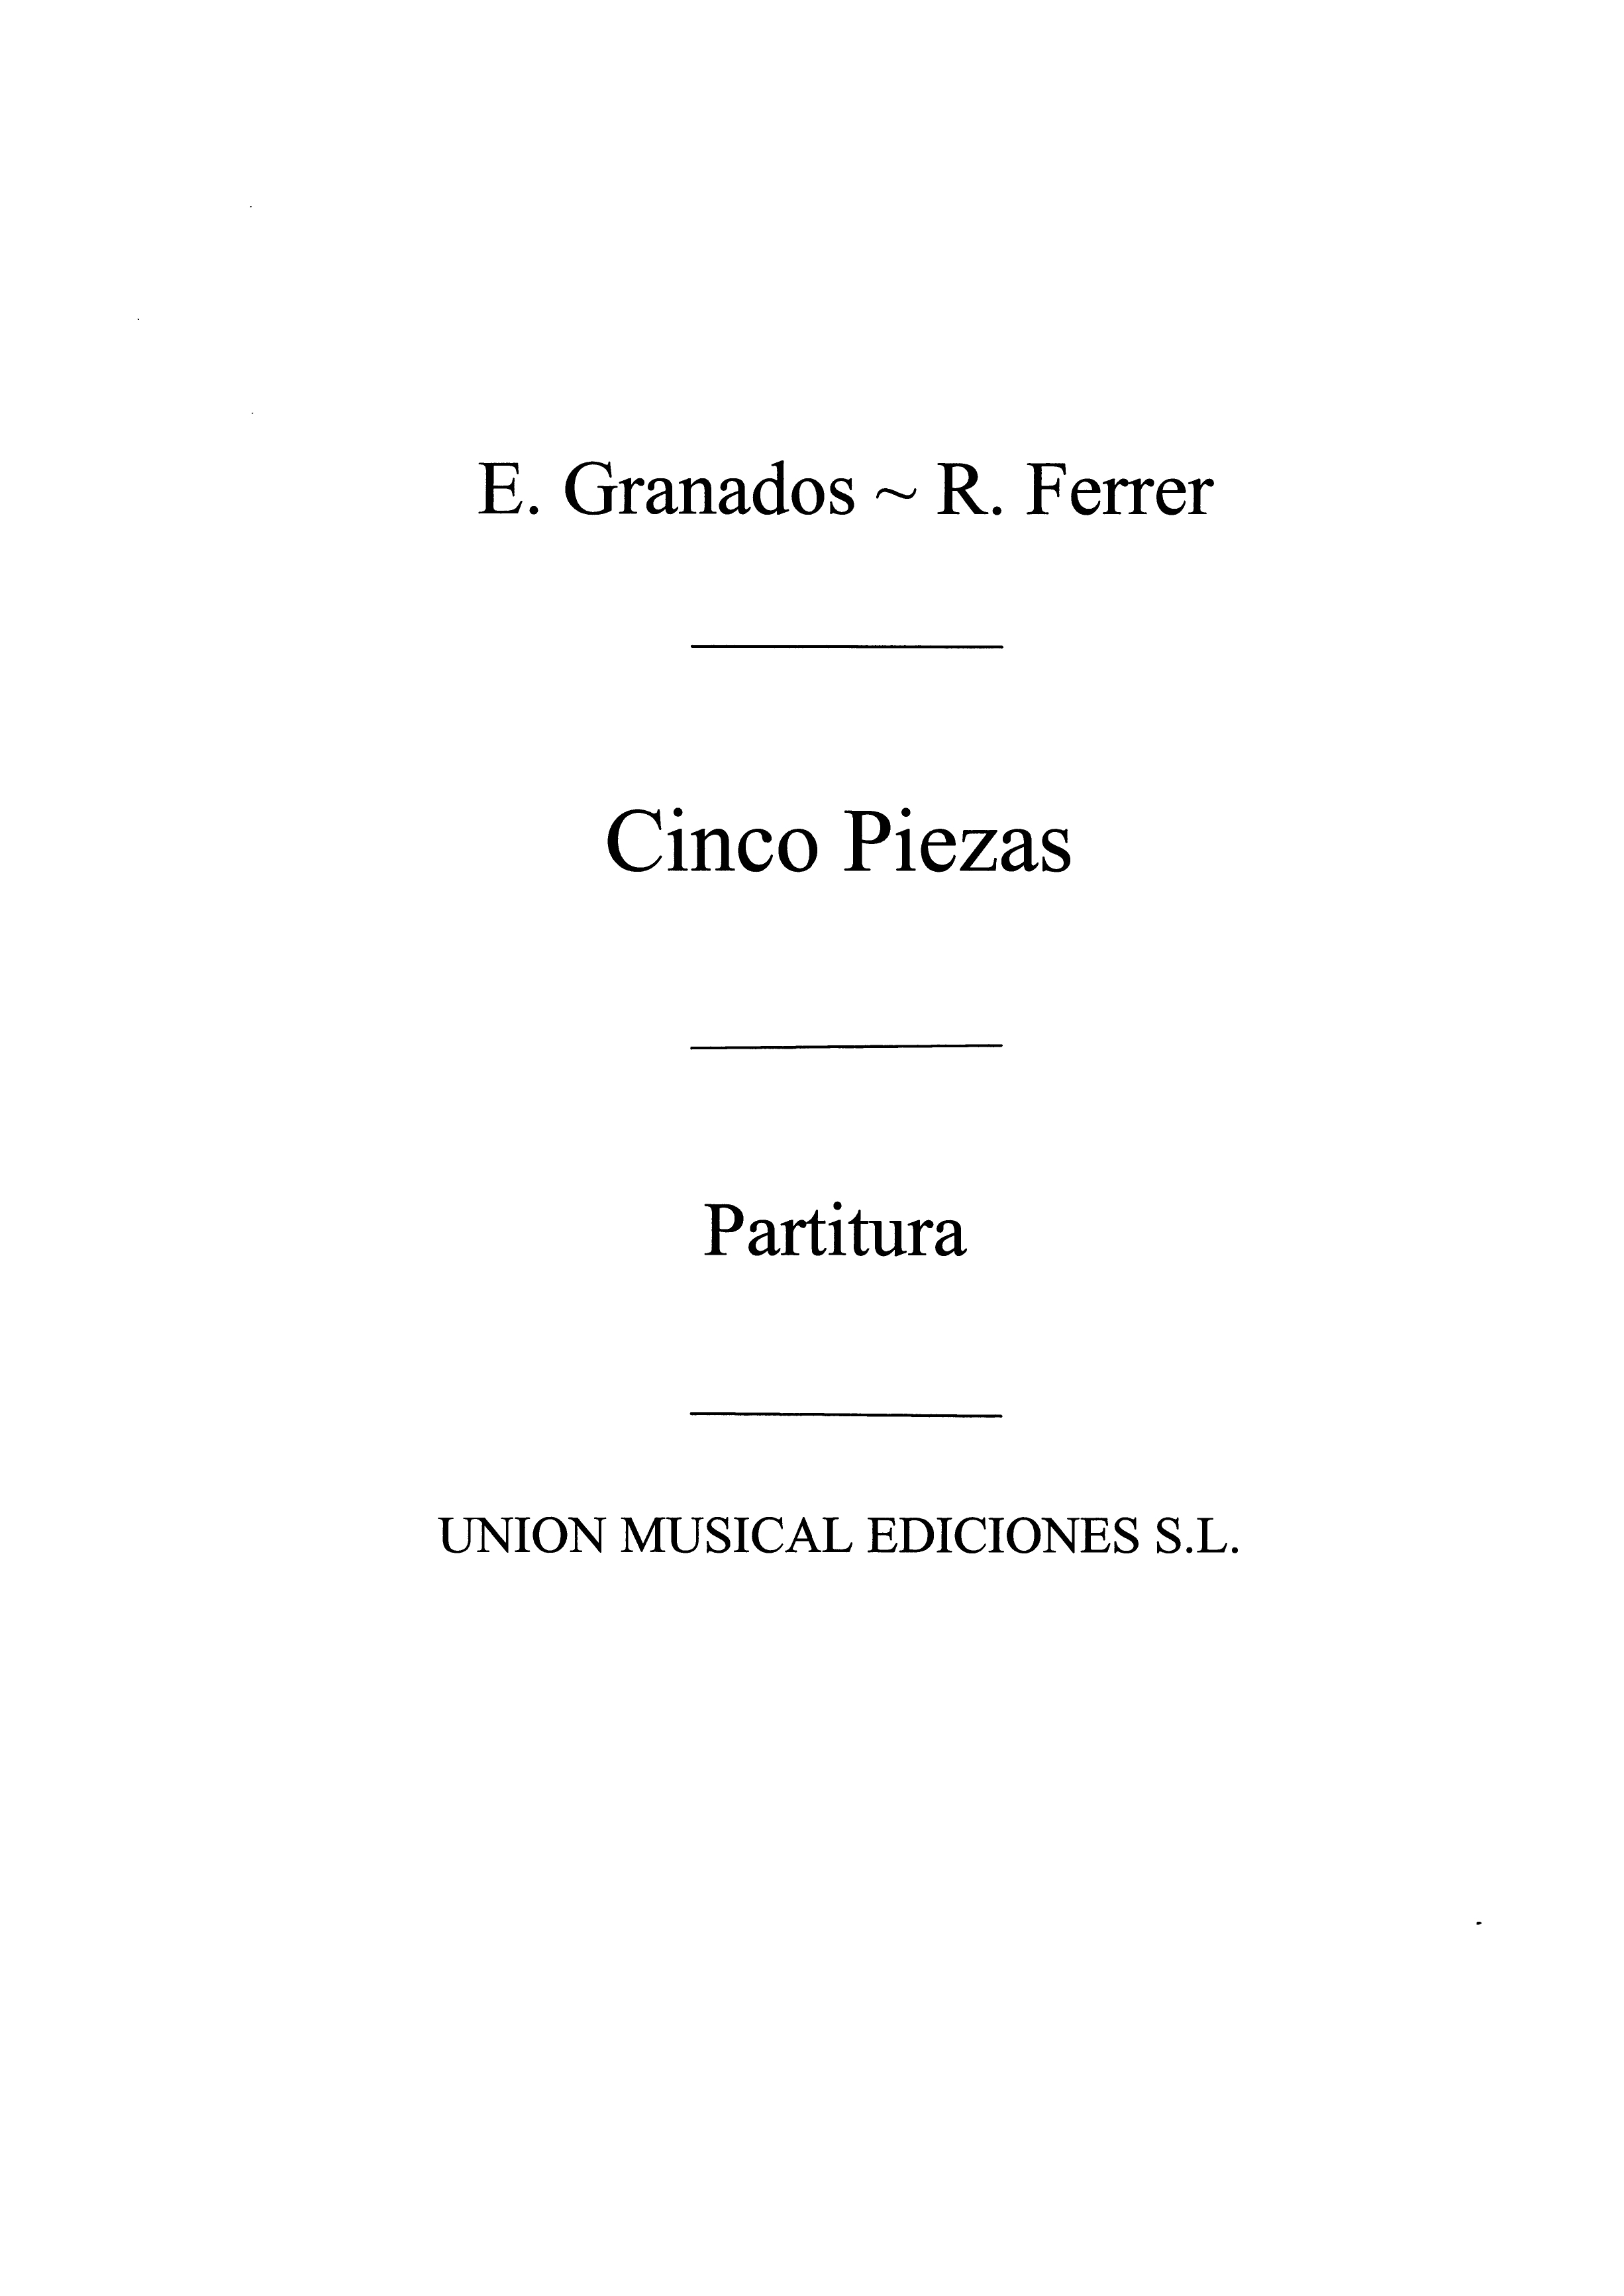 Granados: Cinco Piezas Cantos Populares Score (Ferrer) for Orchestra